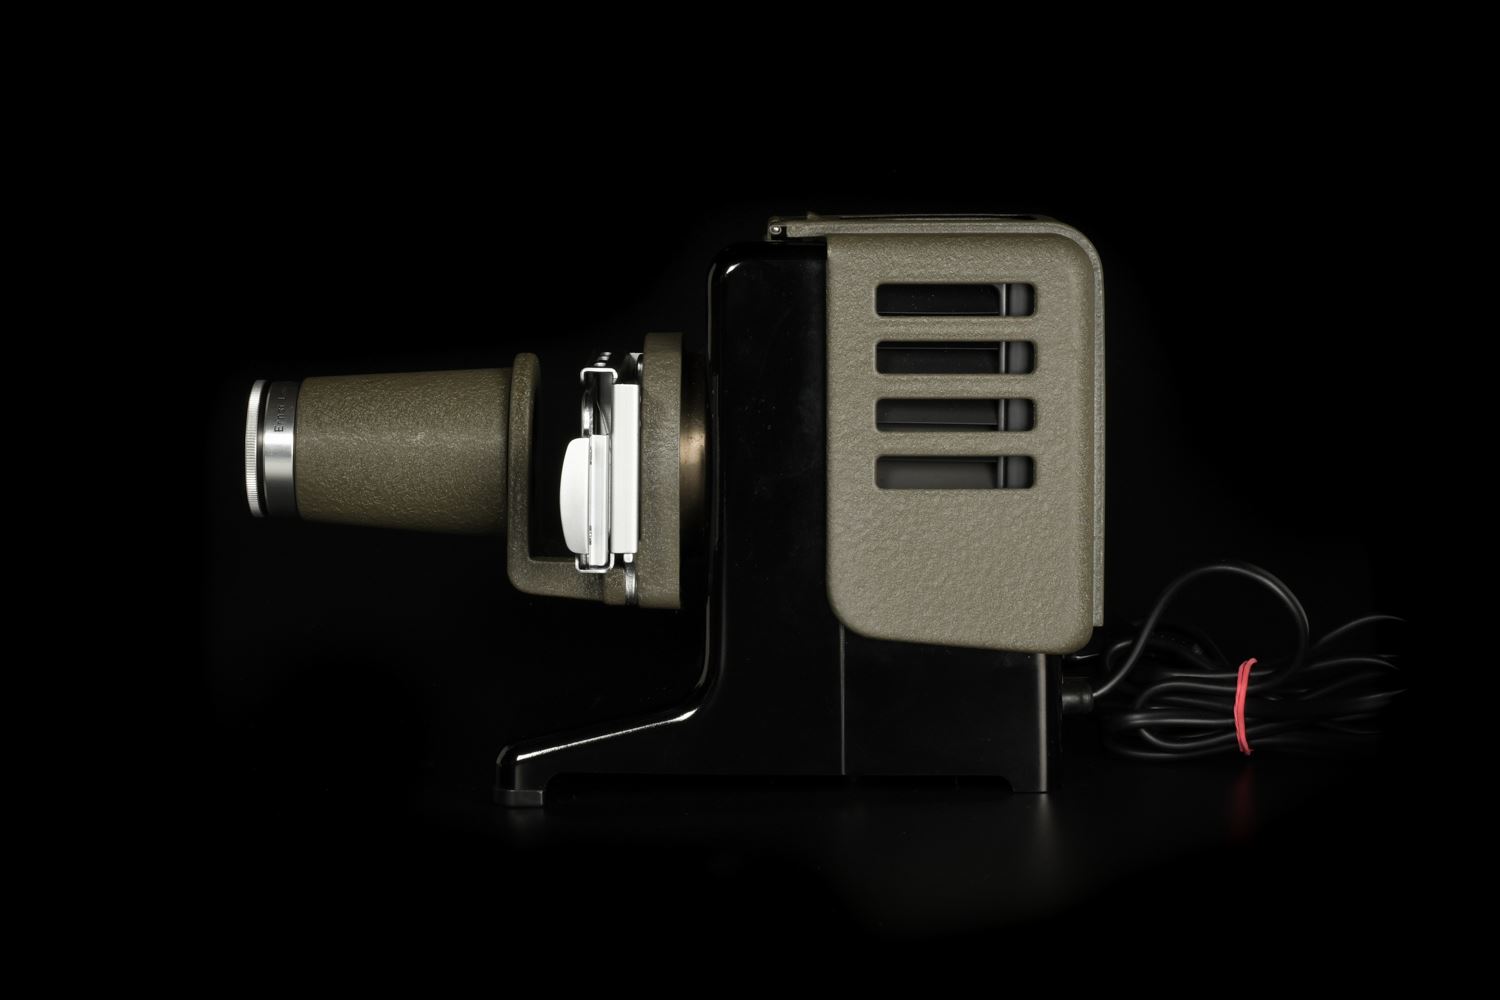 Picture of Leica Prado 150 Projektor